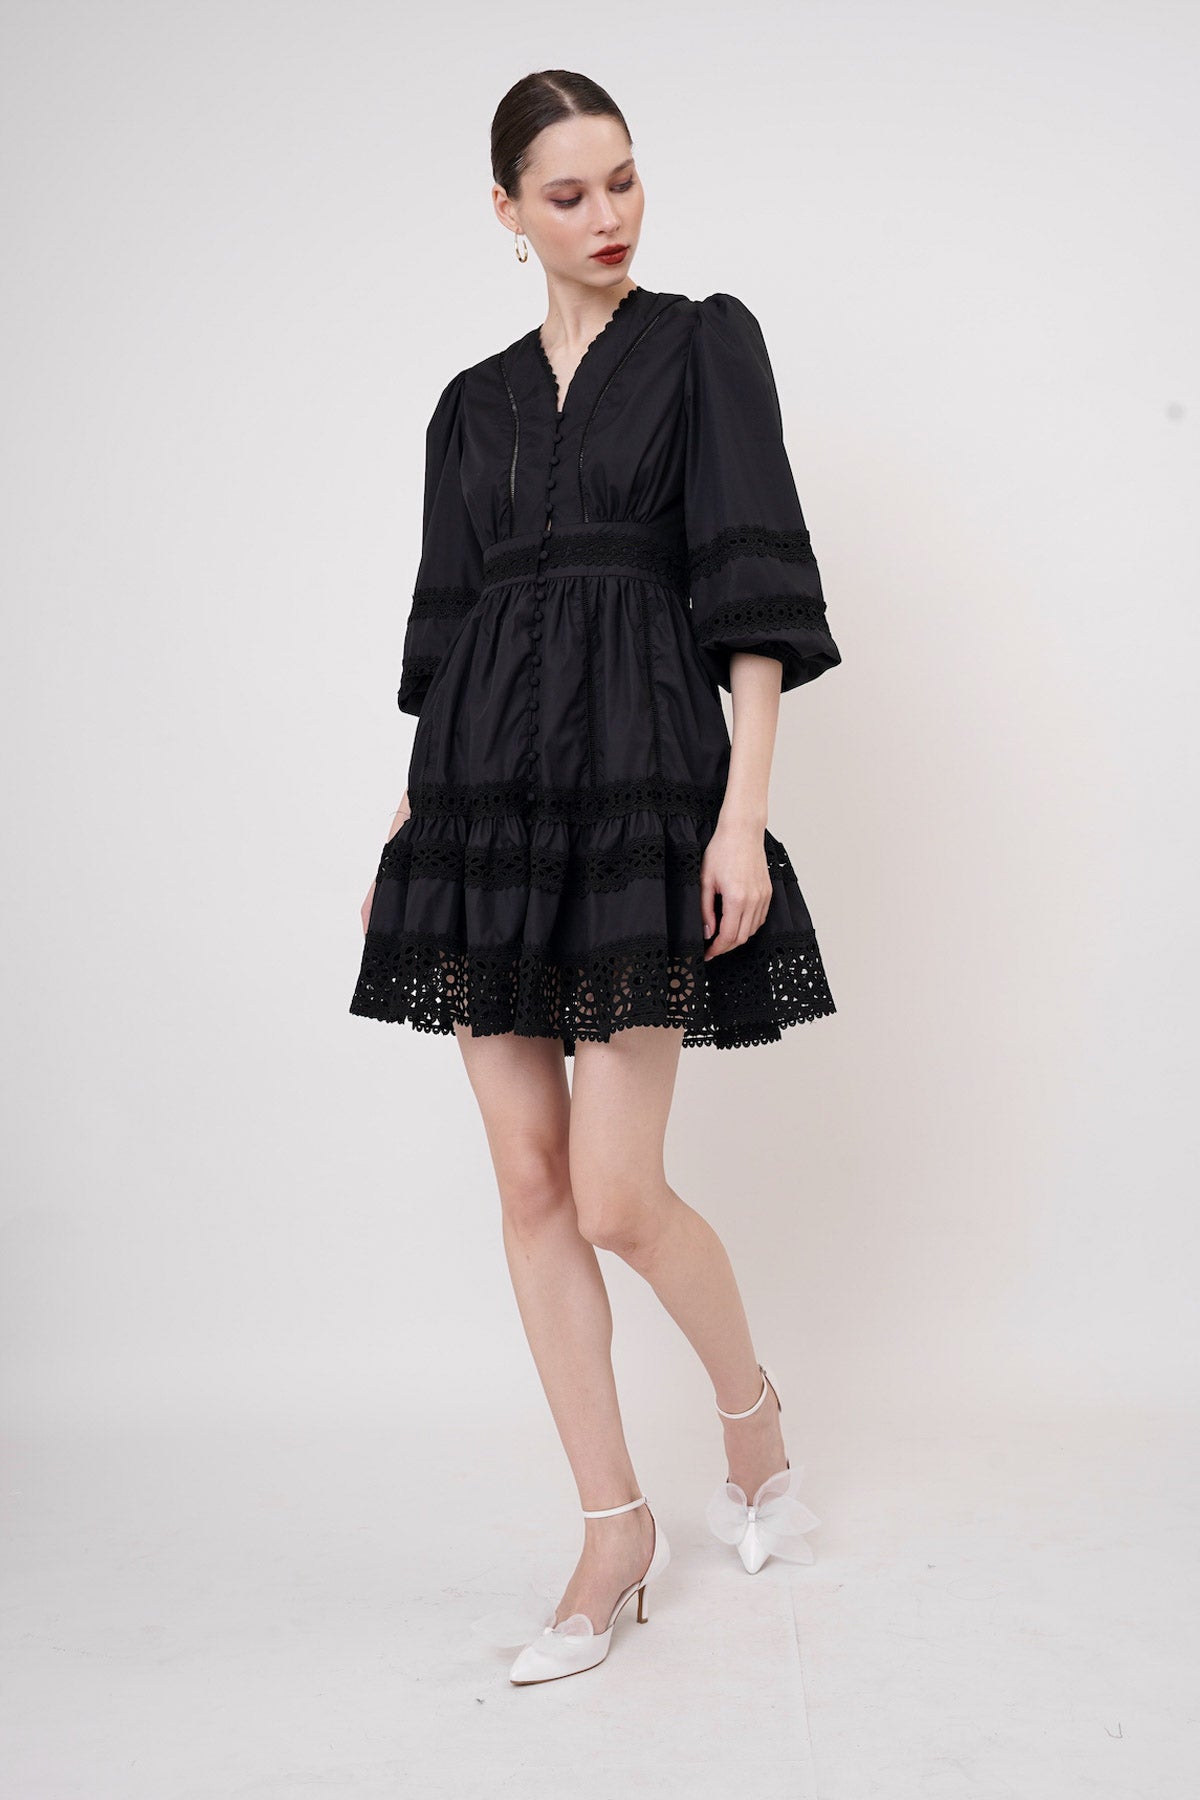 Lacy Mini Dress In Black (2 LEFT)